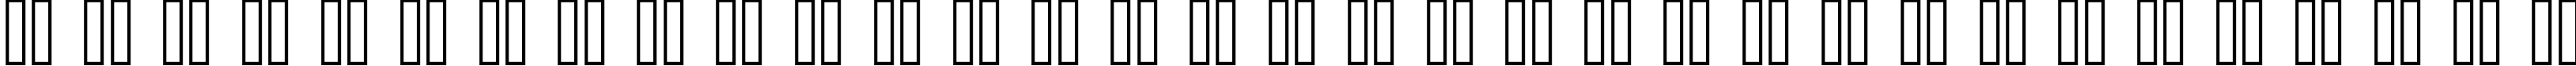 Пример написания русского алфавита шрифтом italic 08_55